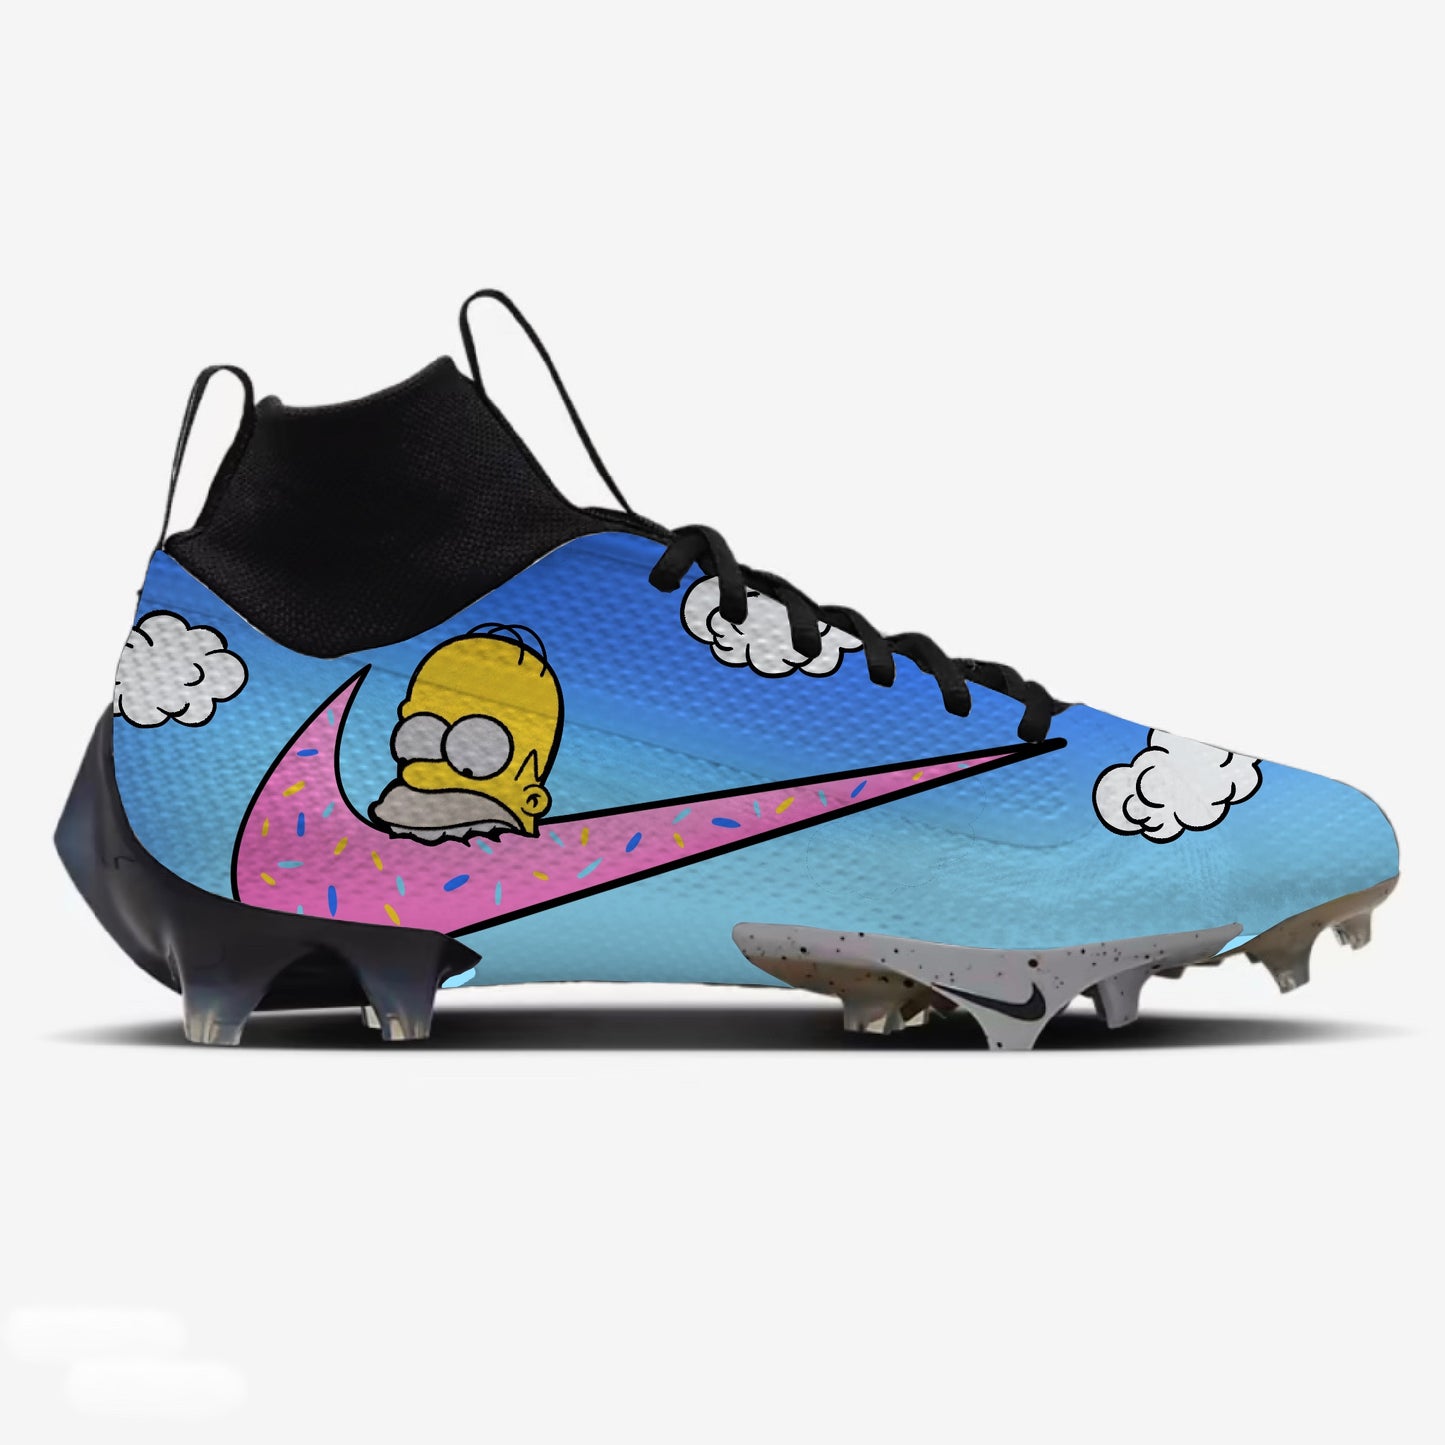 Simpson Nike Football Cleats